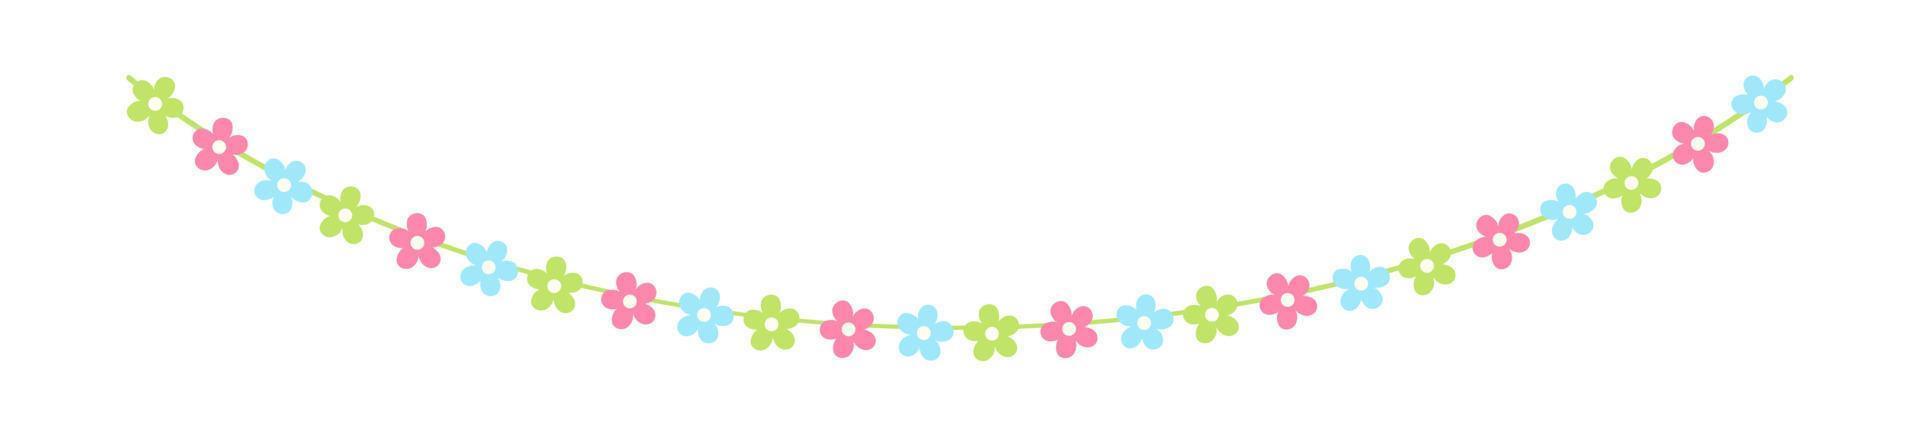 Cute spring floral garland illustration. Flower buntings for springtime designs. vector